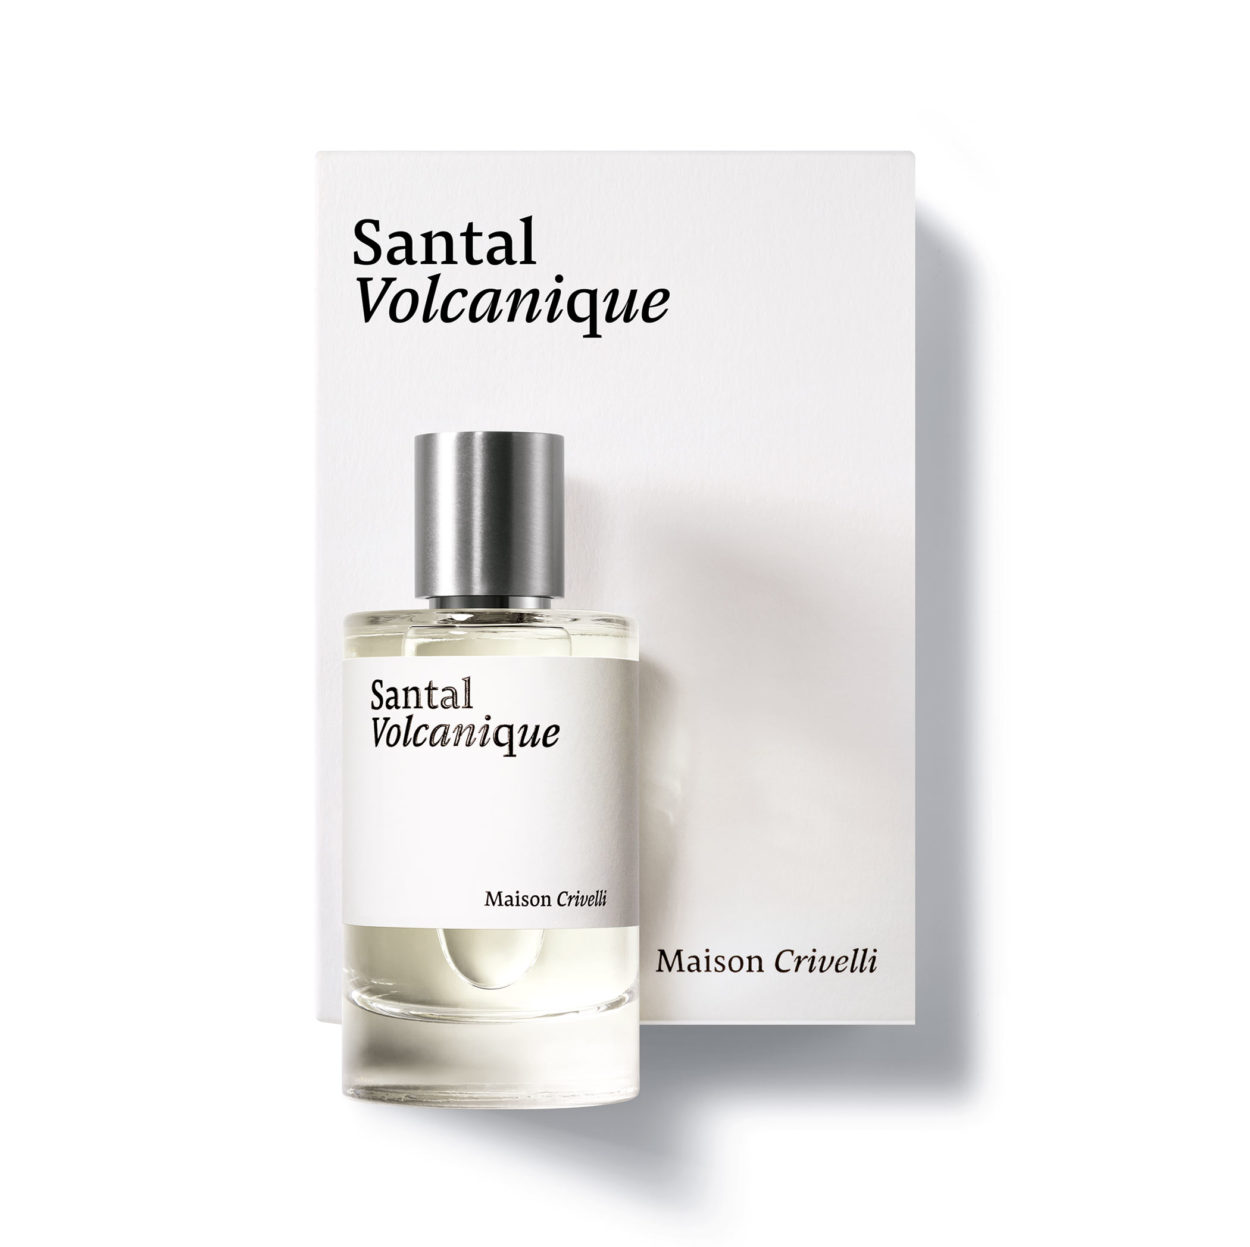 Santal-Volcanique 100ml sandalwood spices ginger niche perfume - Maison Crivelli